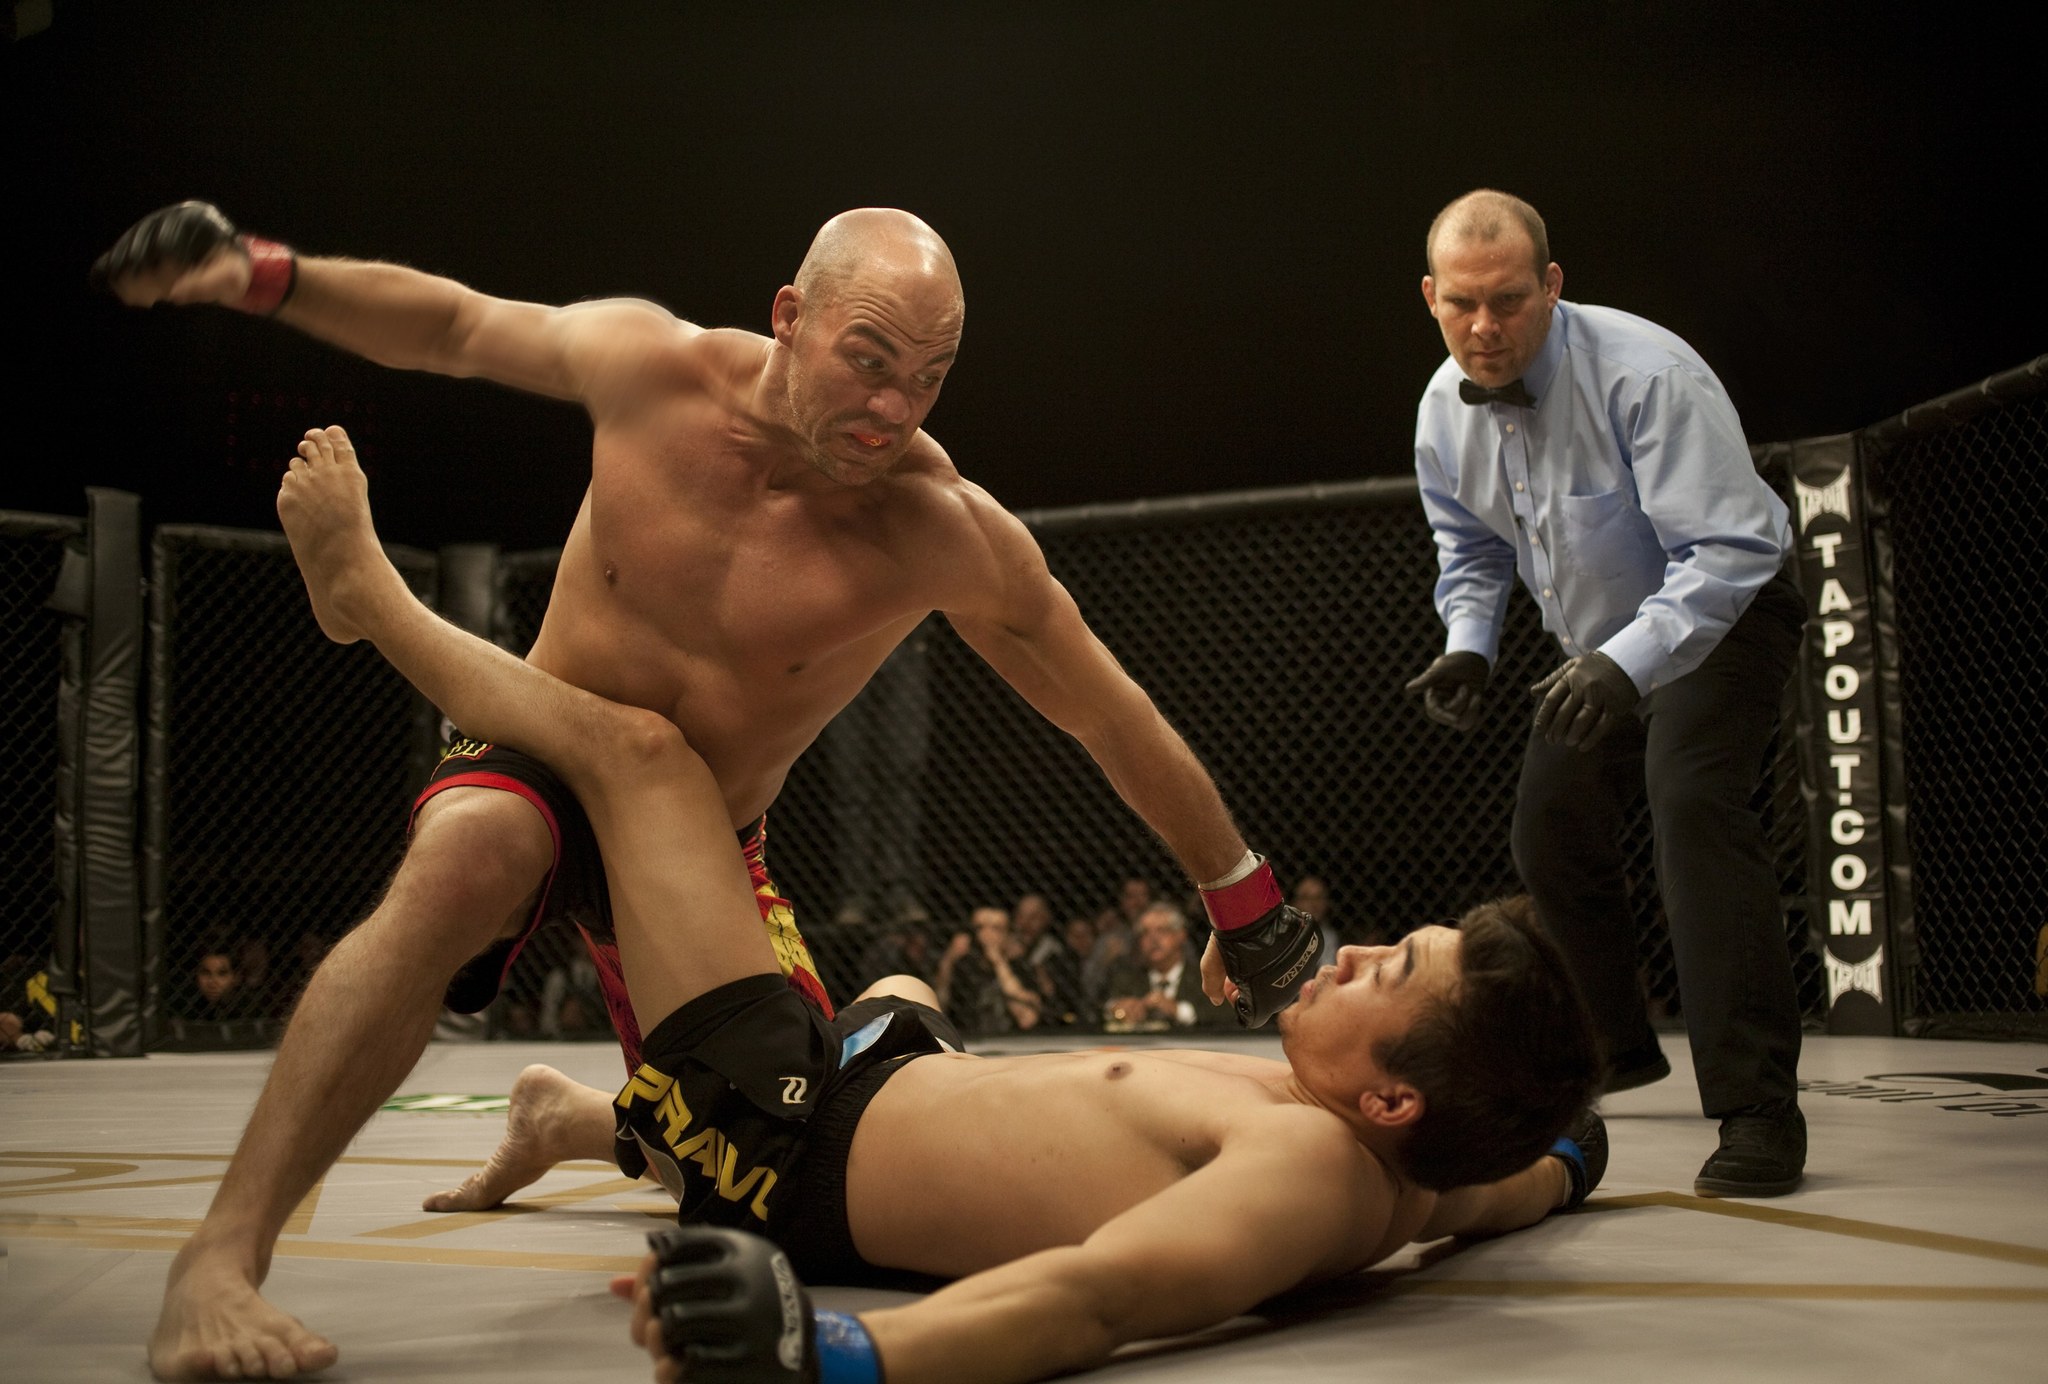 Kurt Angle in Warrior (2011)